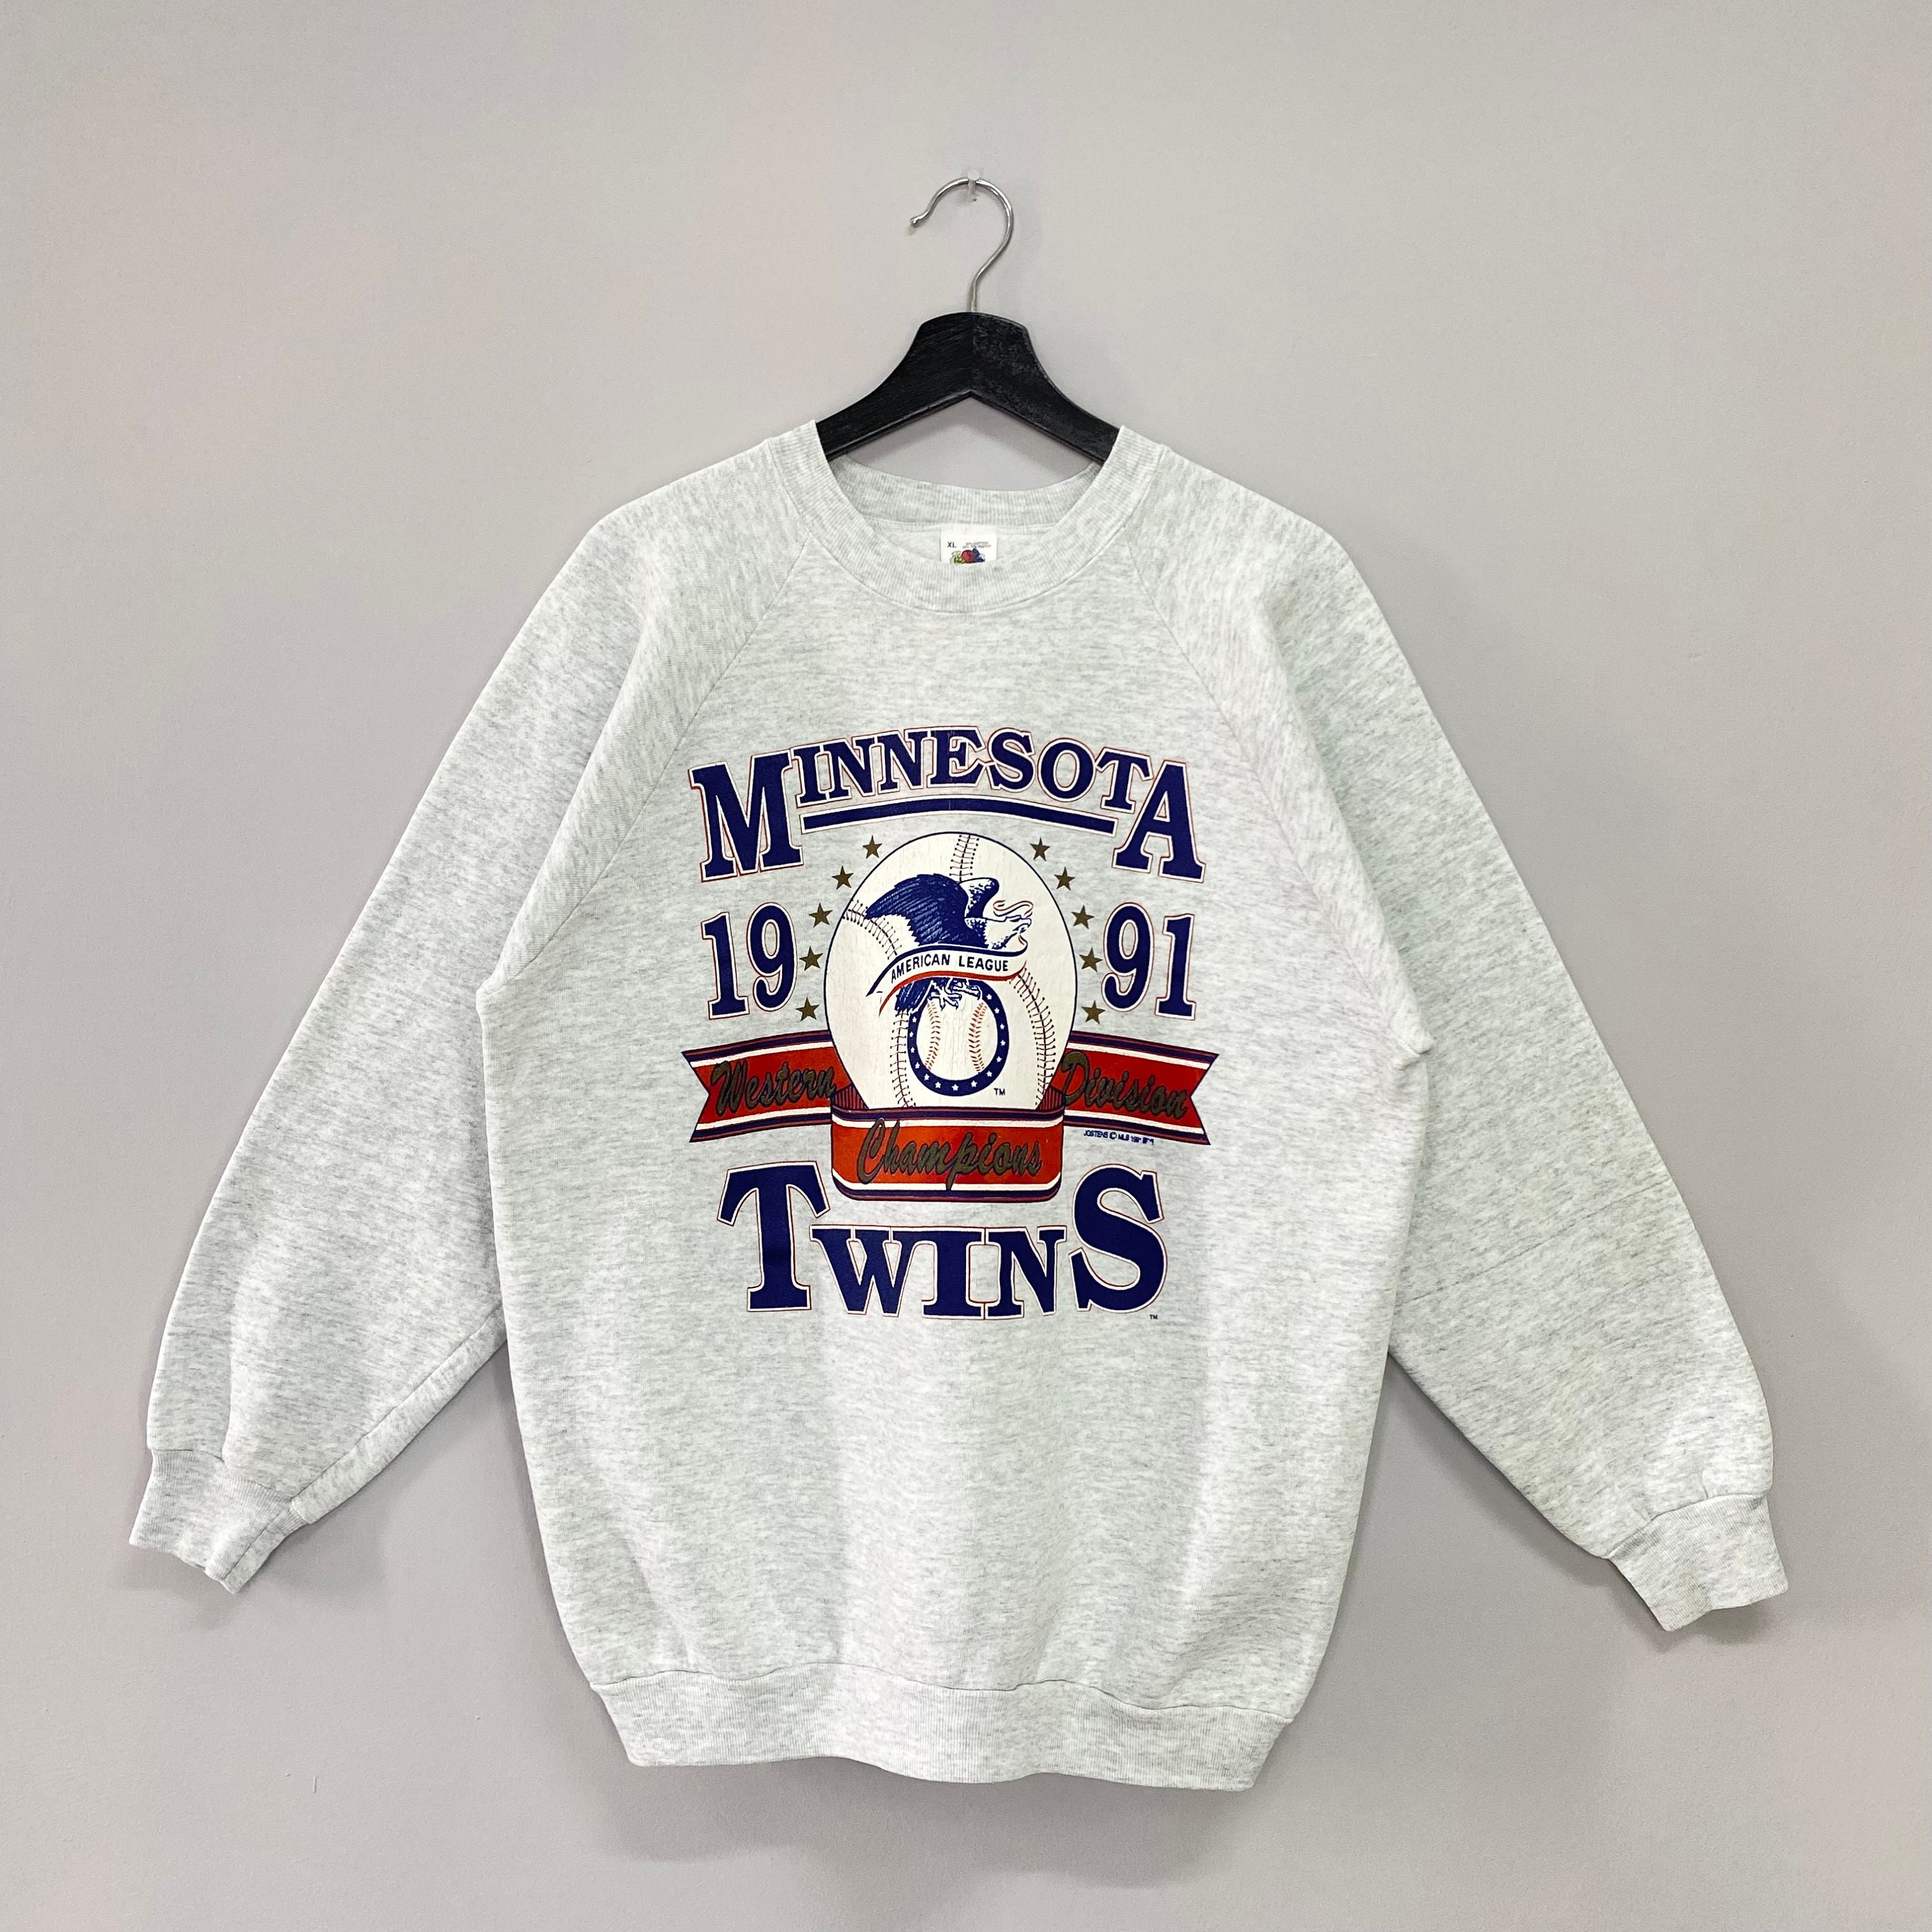 Mlb Minnesota Twins Boys' Pullover Jersey : Target